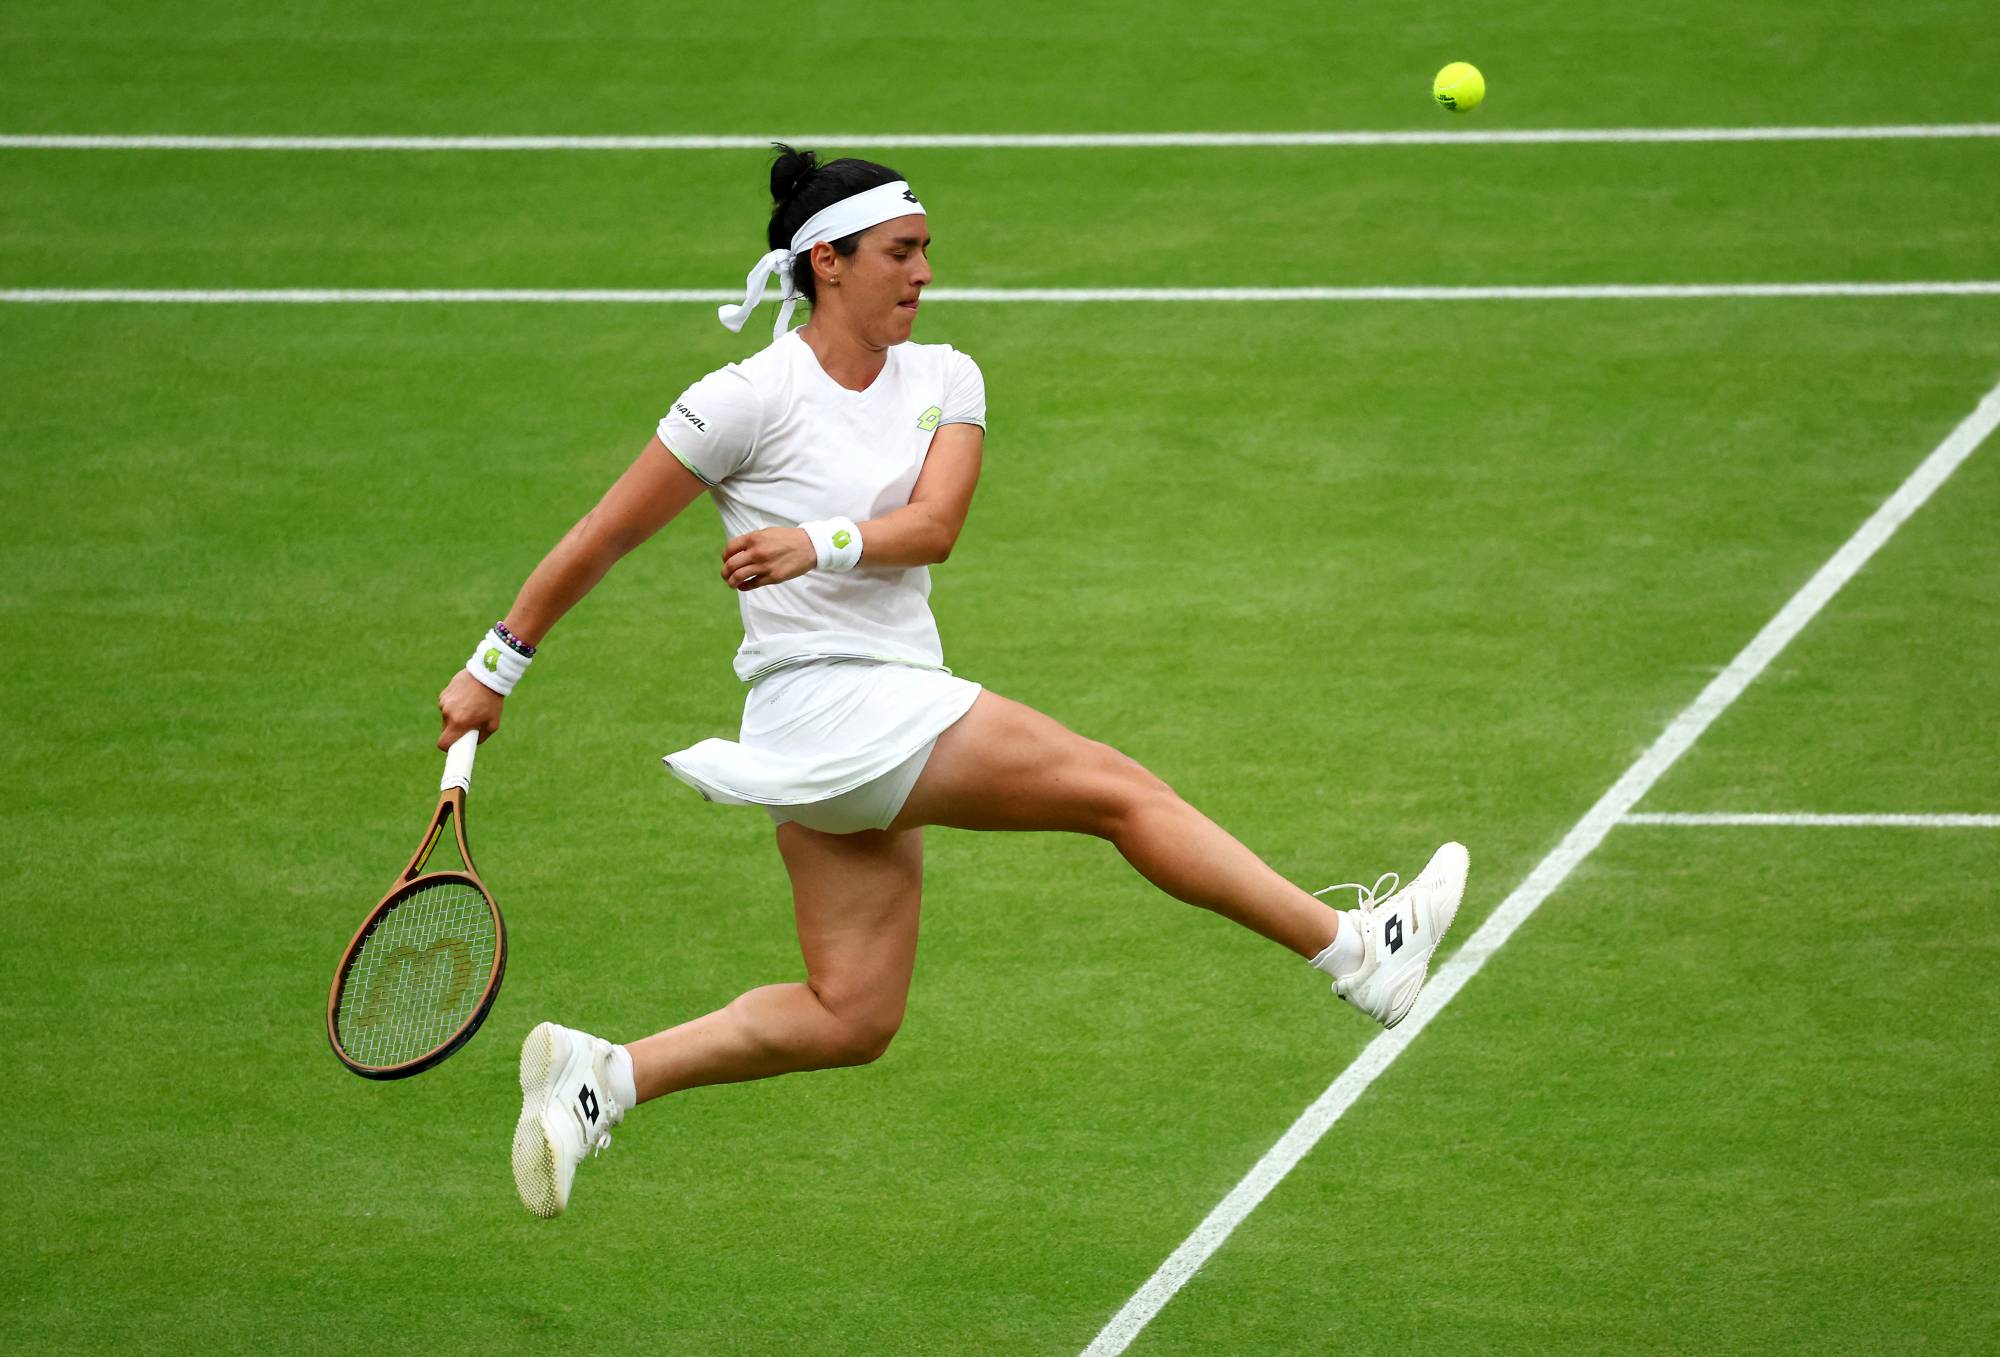 Ons Jabeur and Marketa Vondrousova set up clash for Wimbledon title